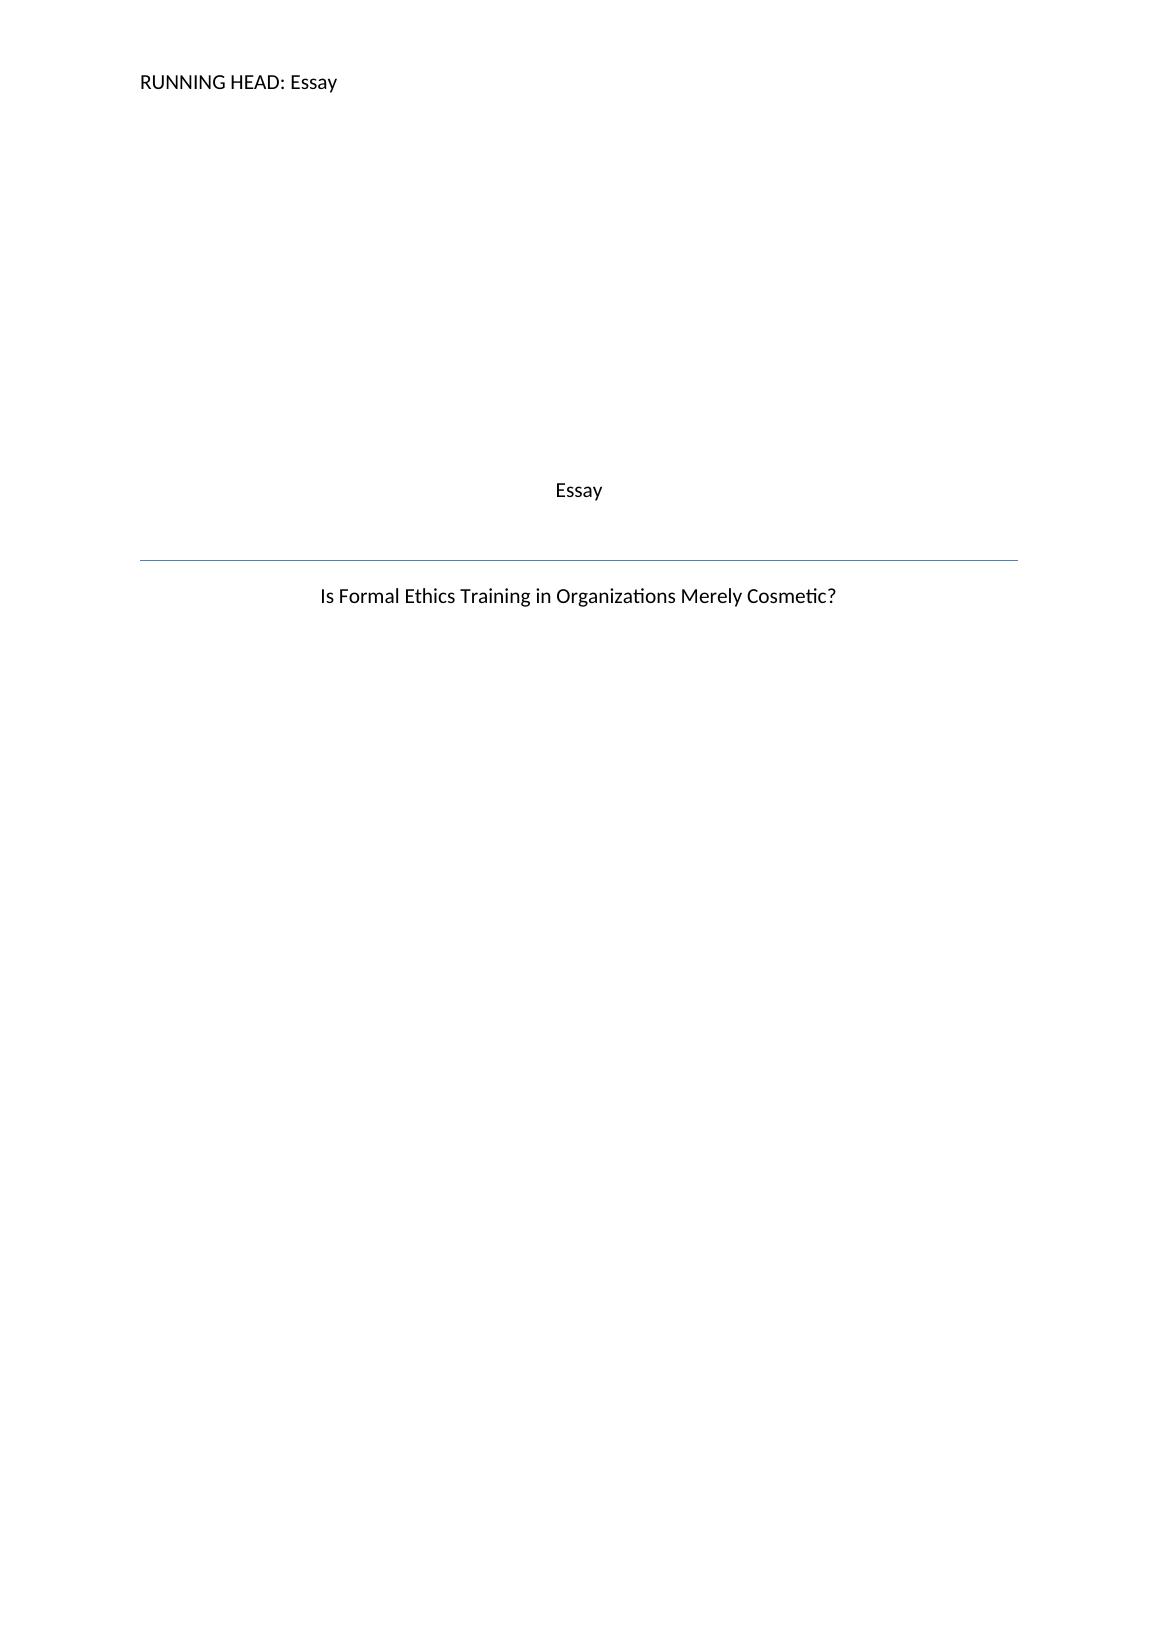 BUSM 4403- Essay on Formal Ethics Program_1